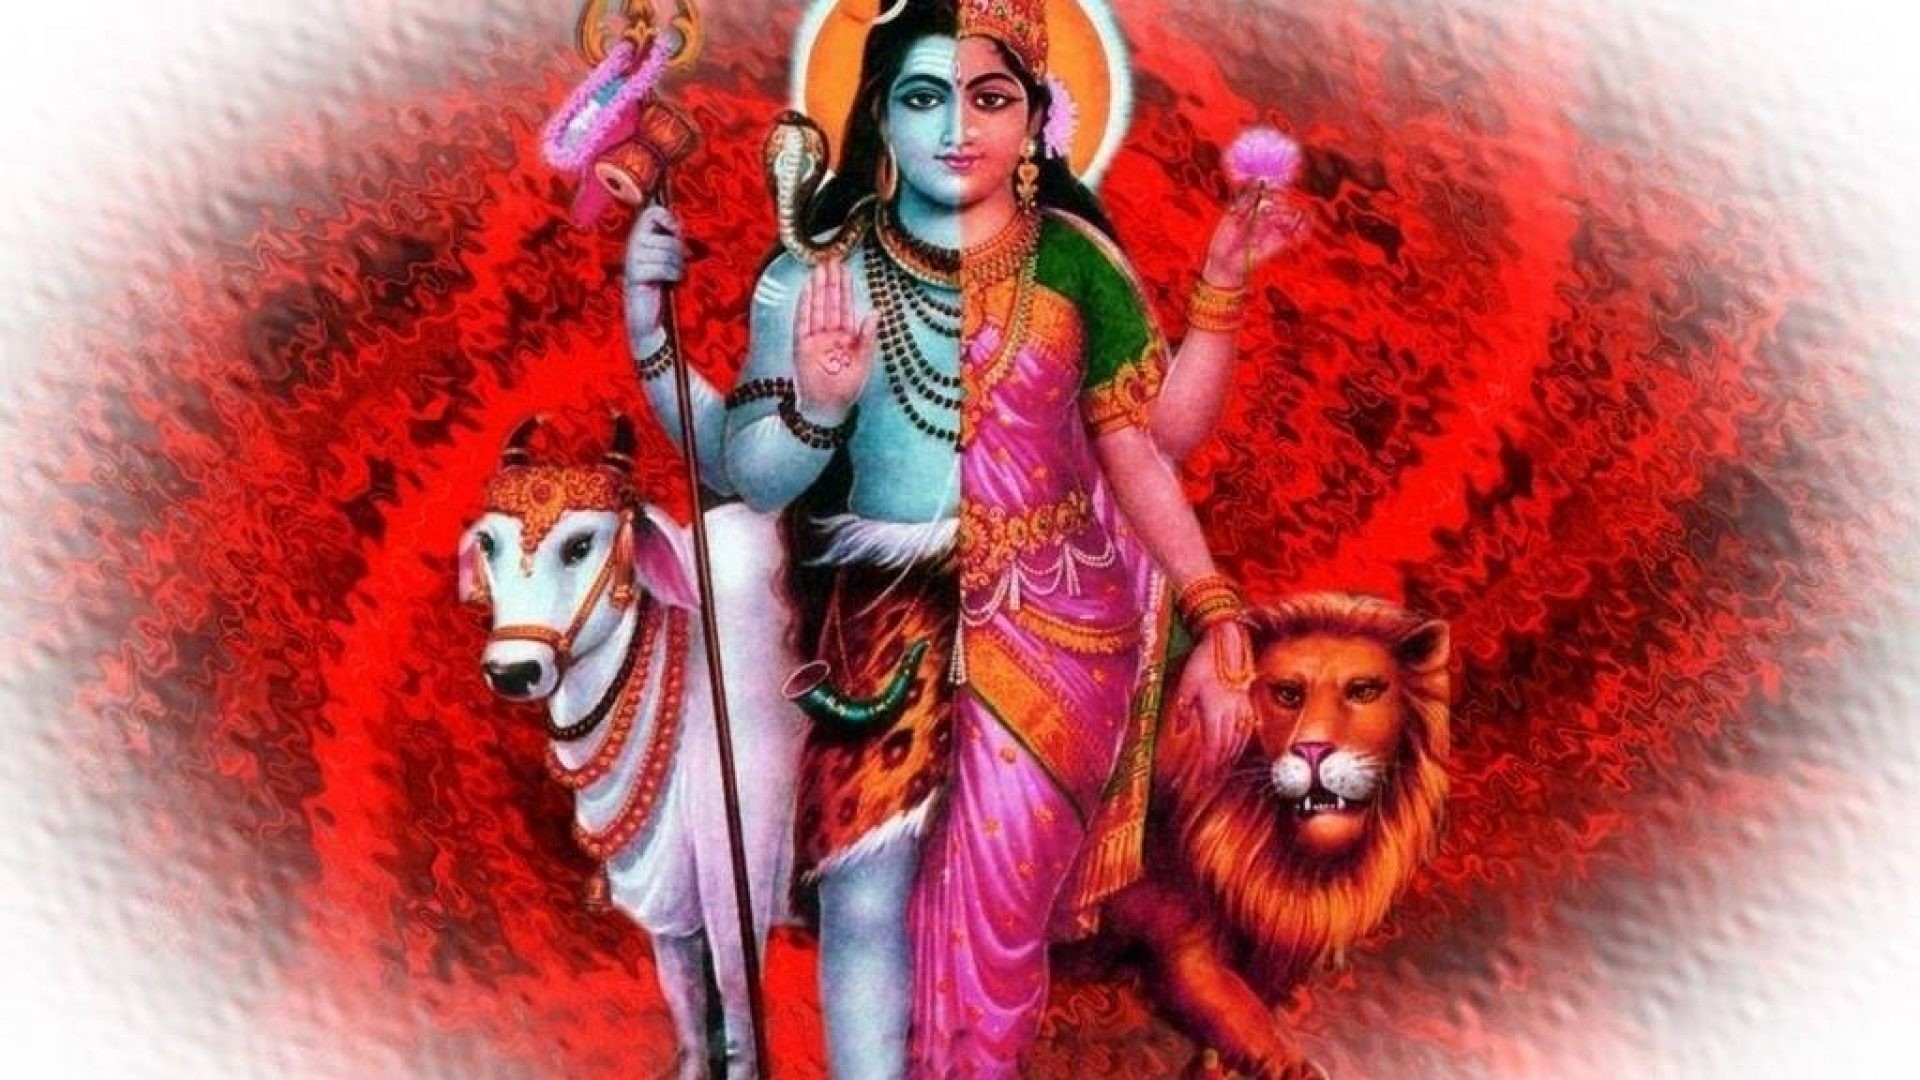 Lord shiva parvati image wallpaper d hindu gods and goddesses